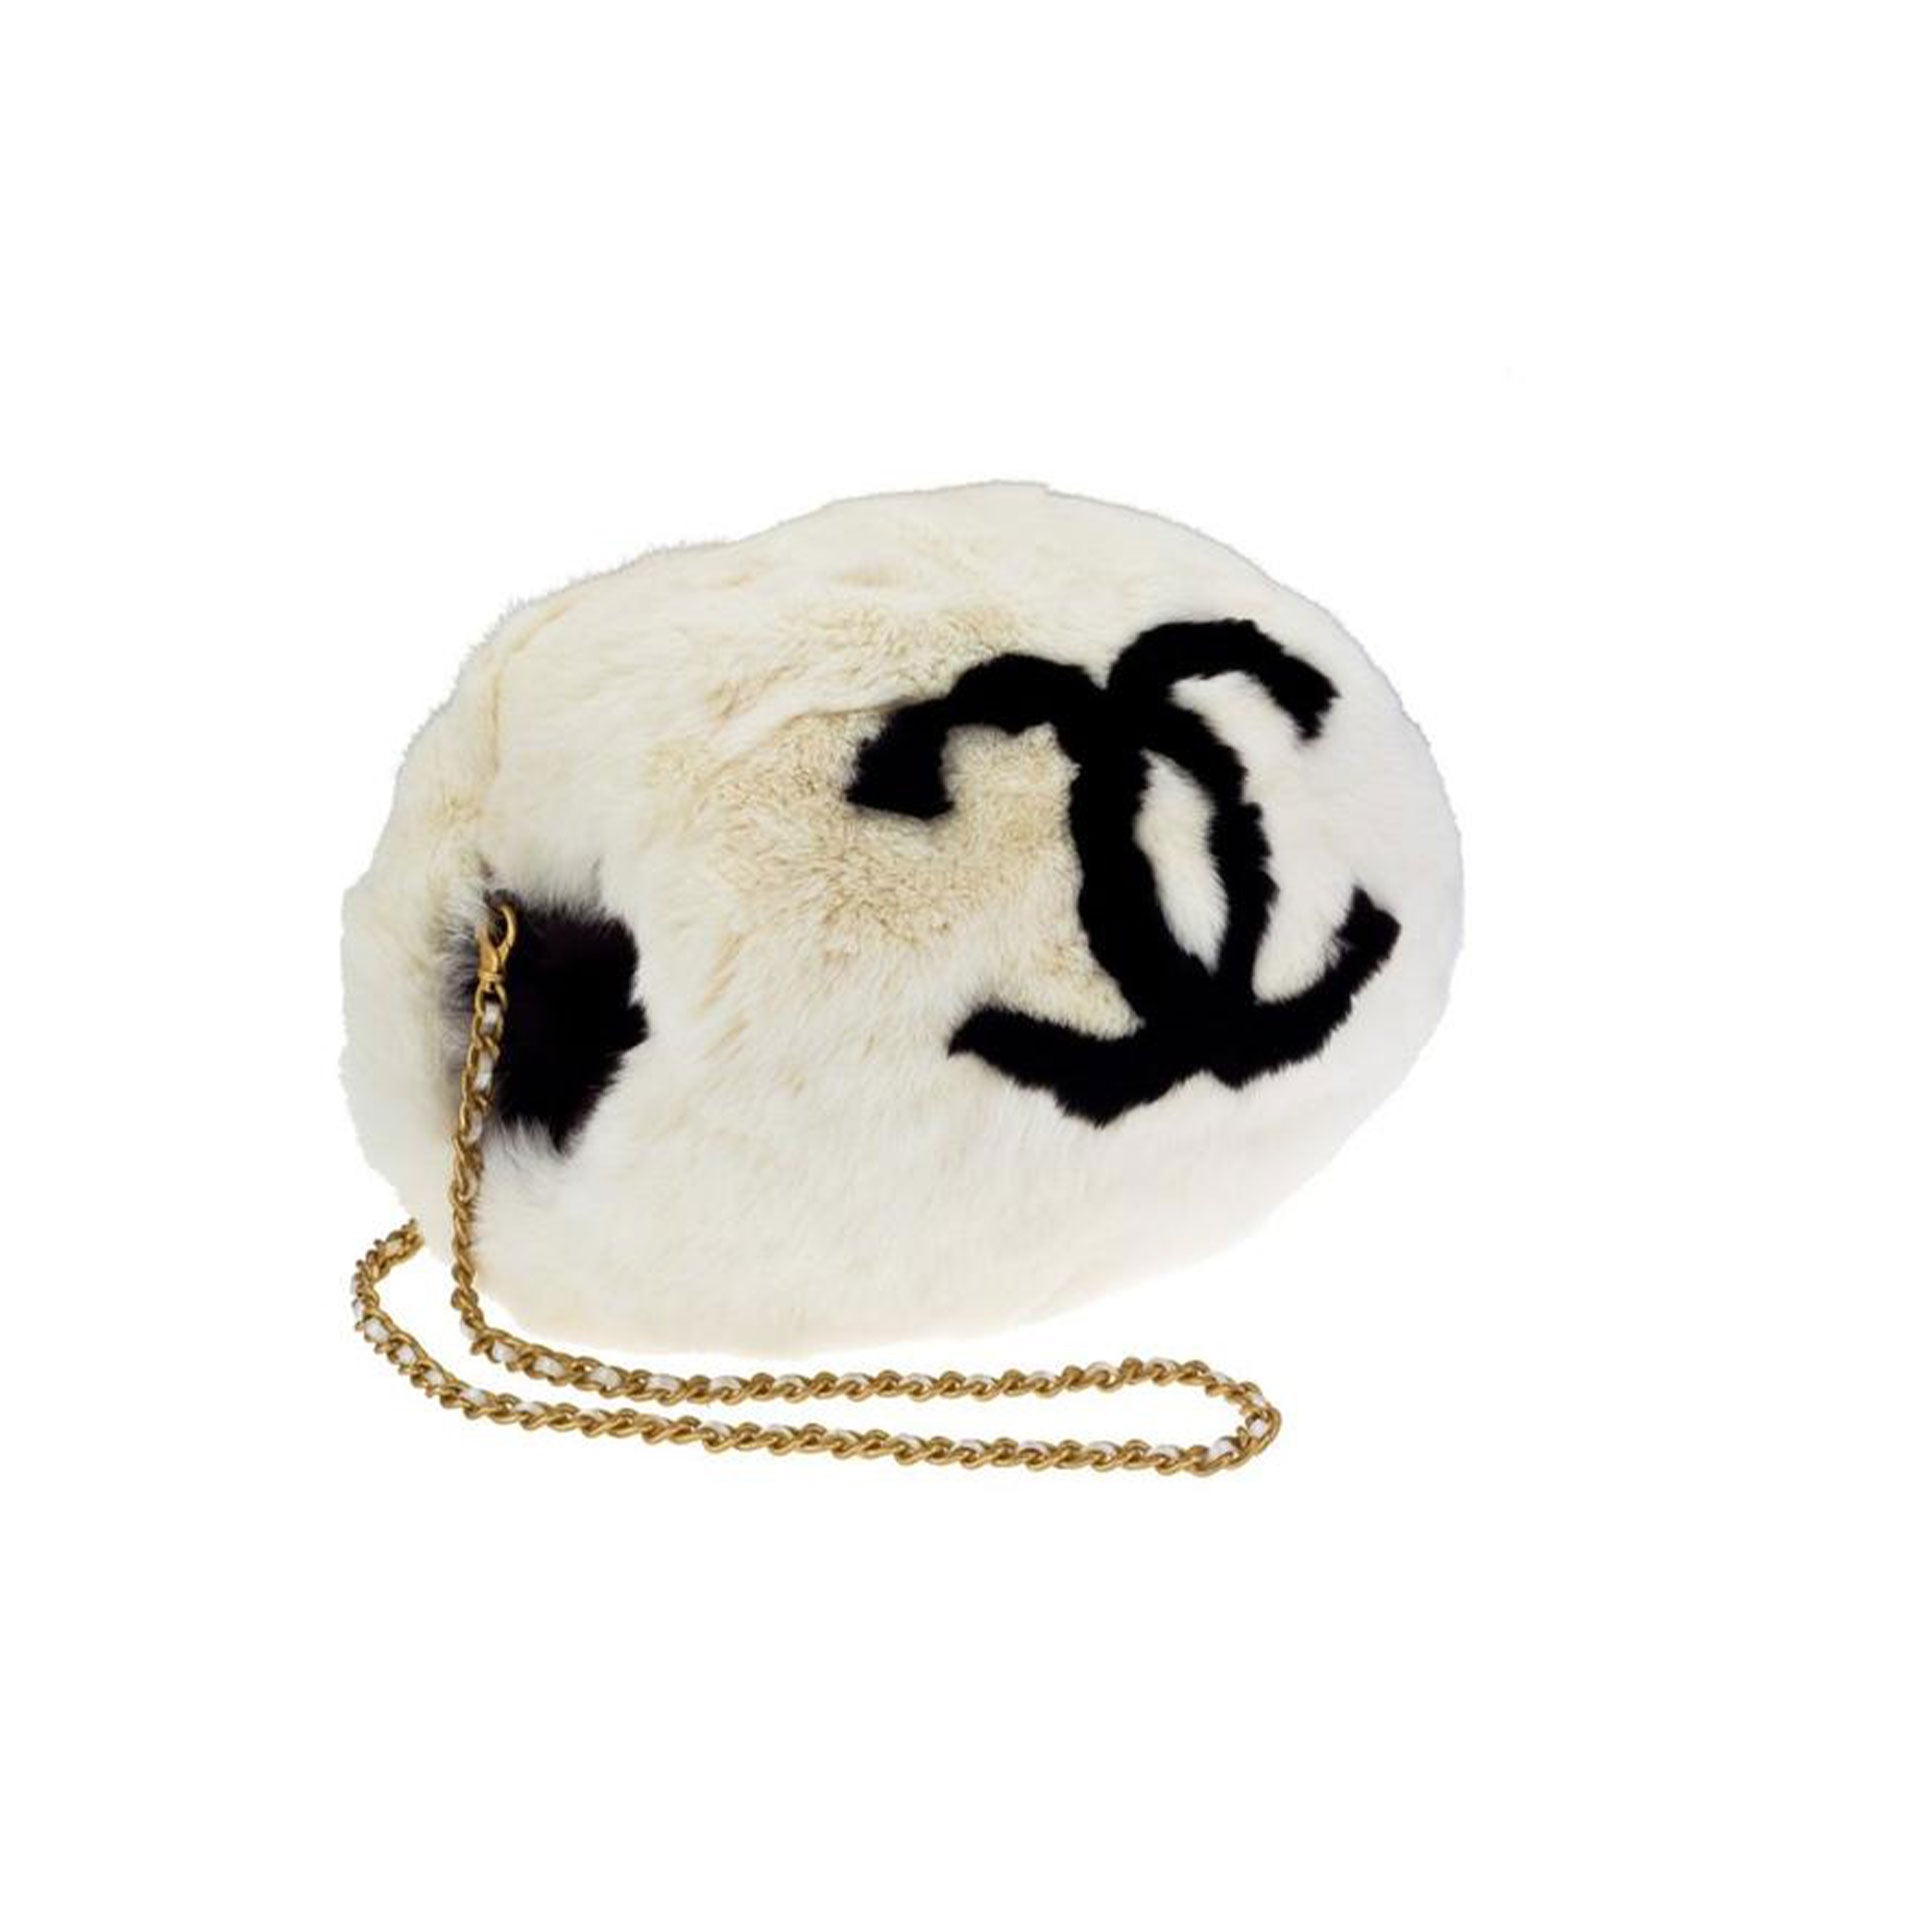 Chanel Muff Bag Black & White Fur - Rare Collector's Piece